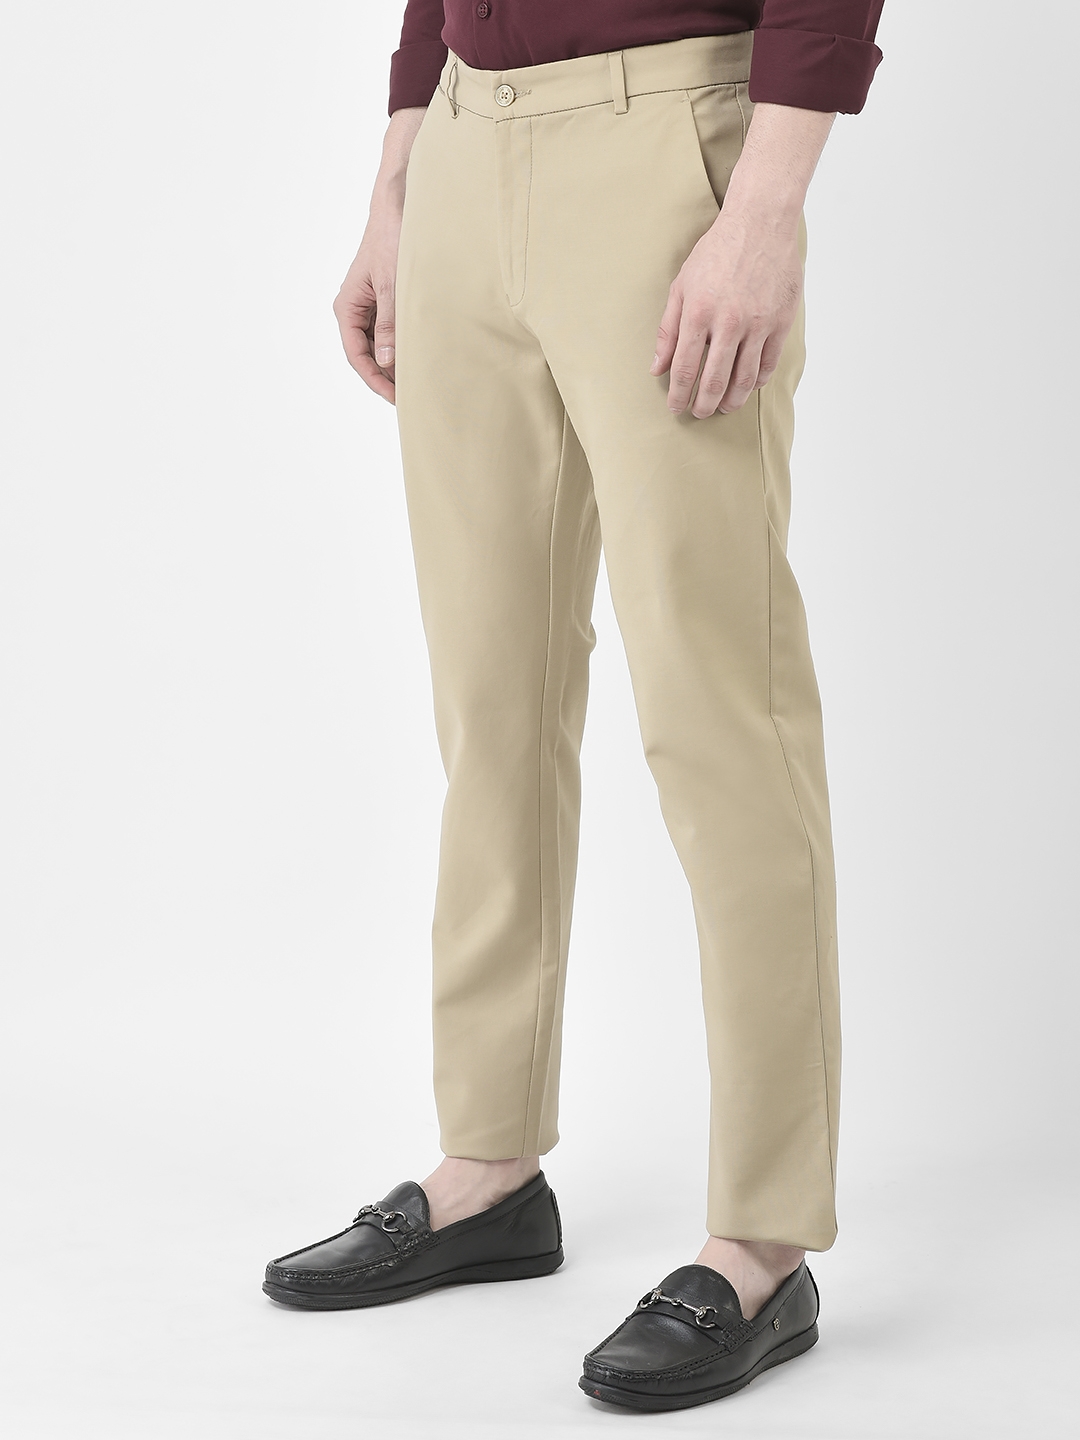 Buy Crimsoune Club Men Green Trousers - 30 at Amazon.in